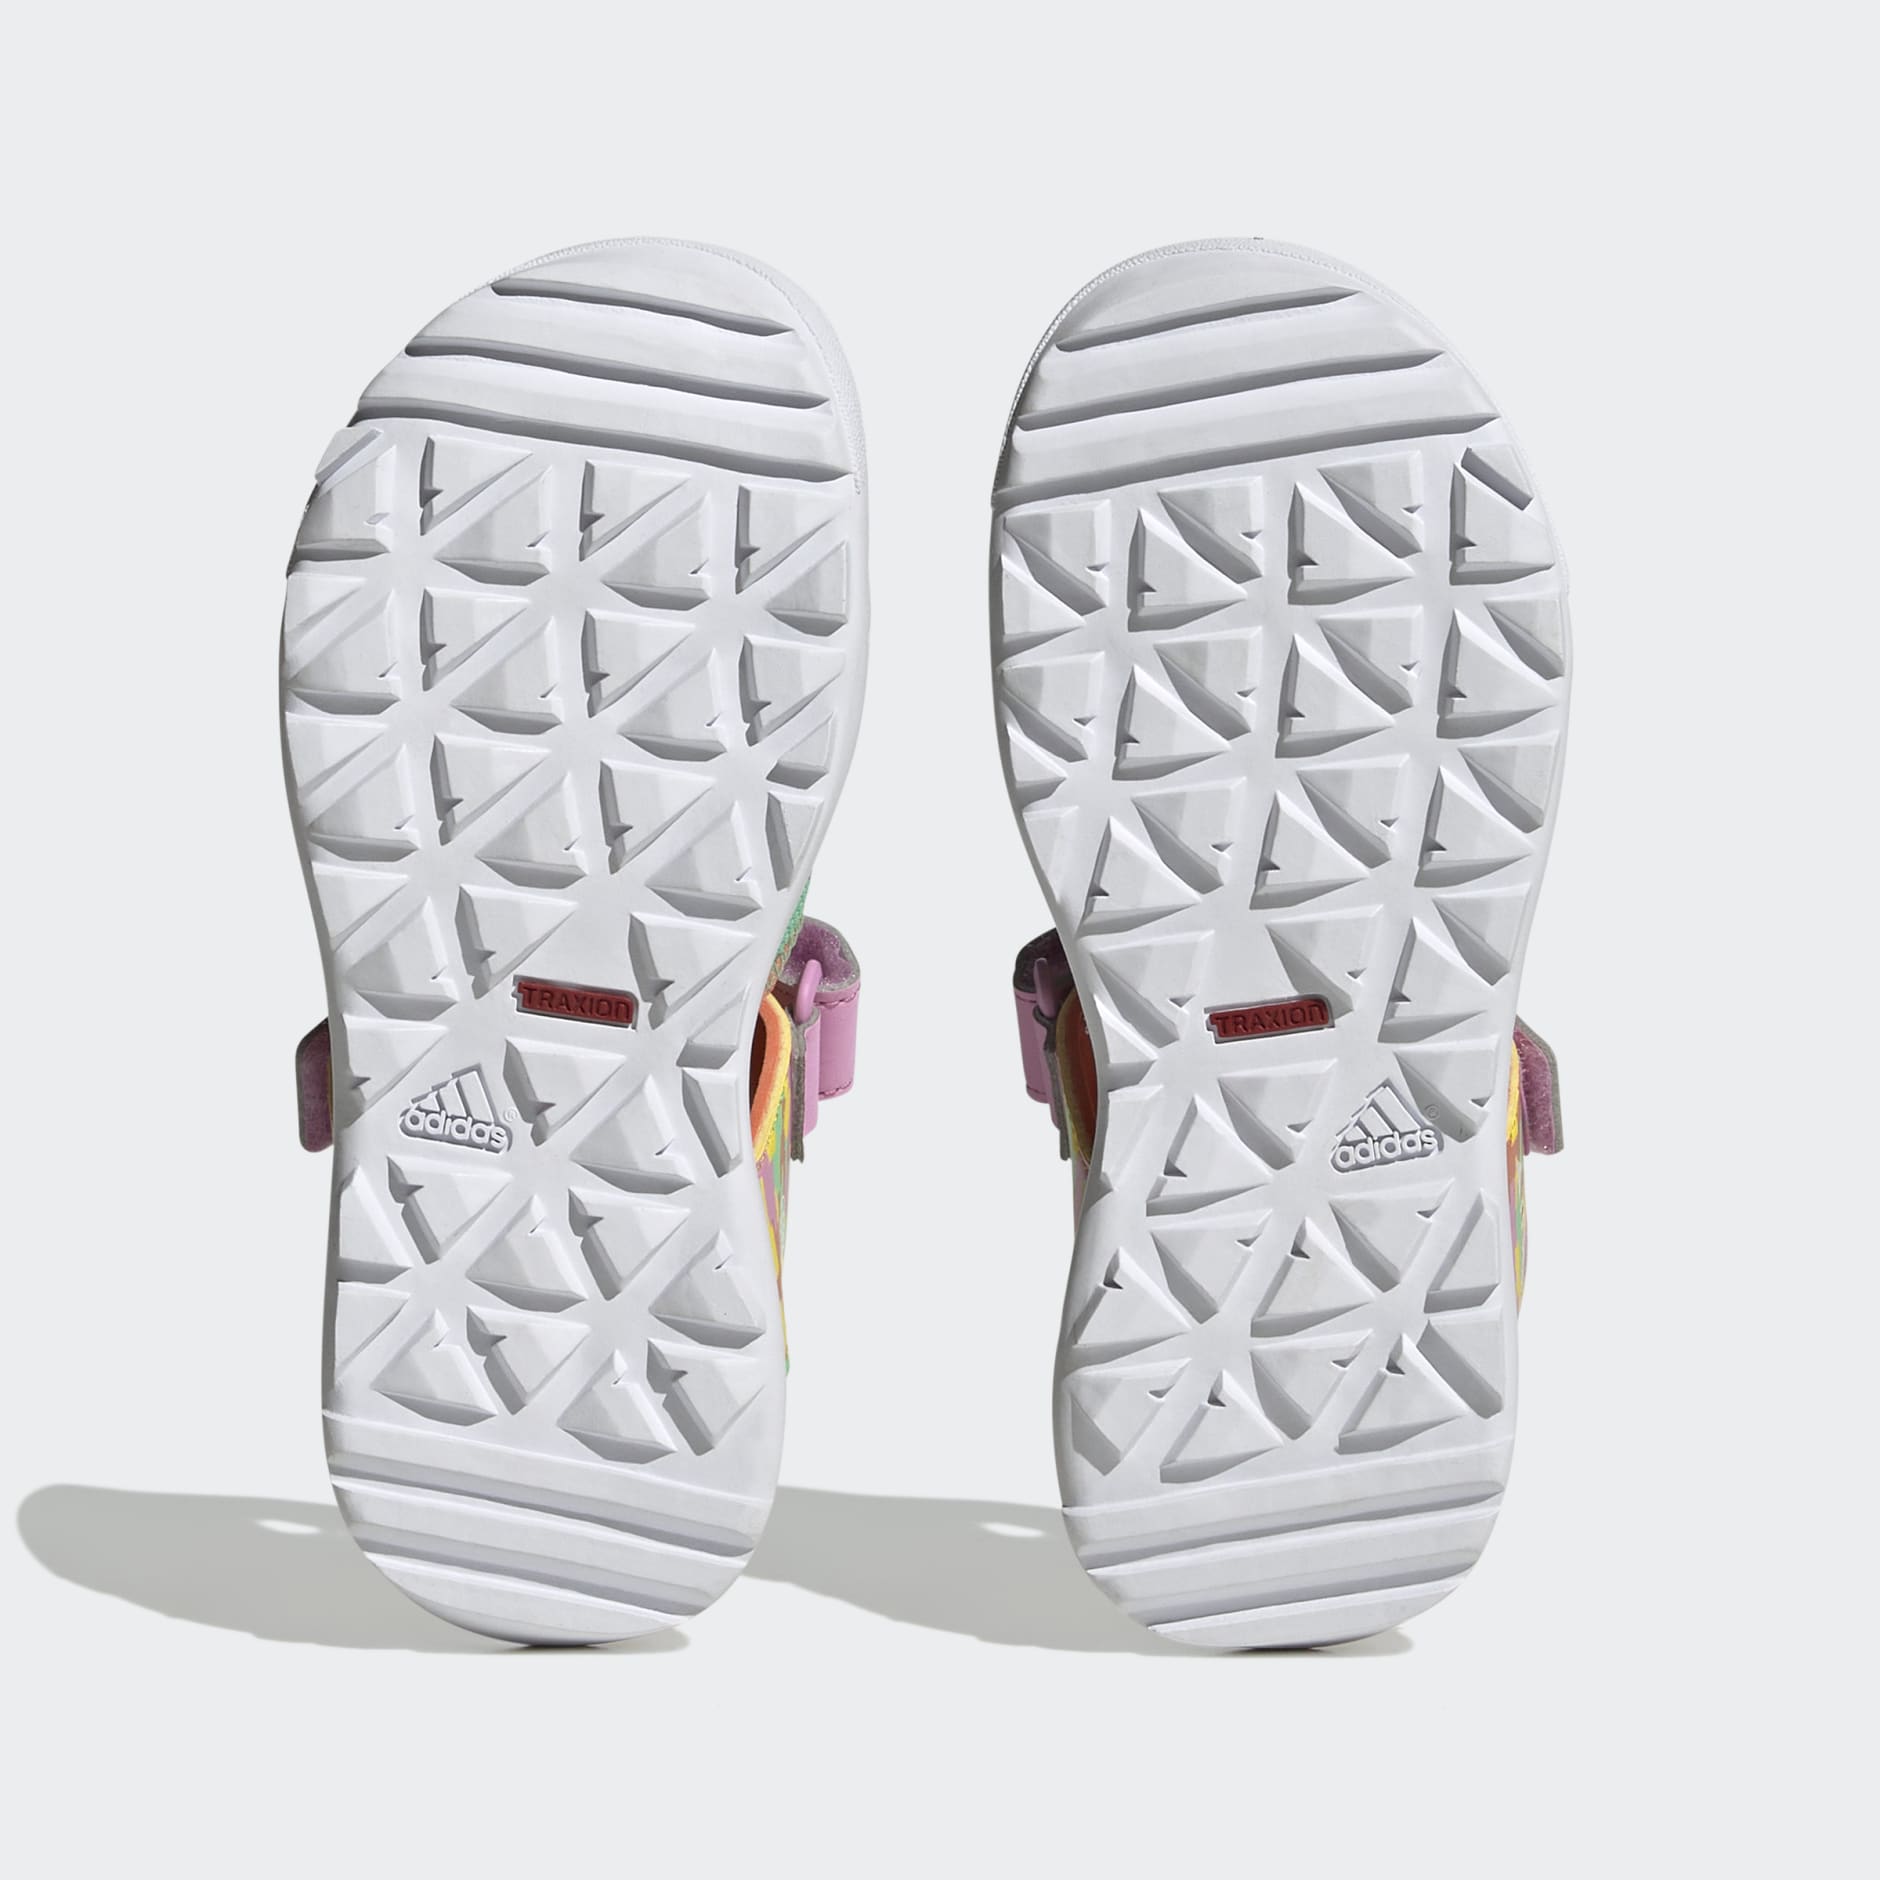 Kids Shoes - Terrex x LEGO® Captain Toey Sandals - Green | adidas